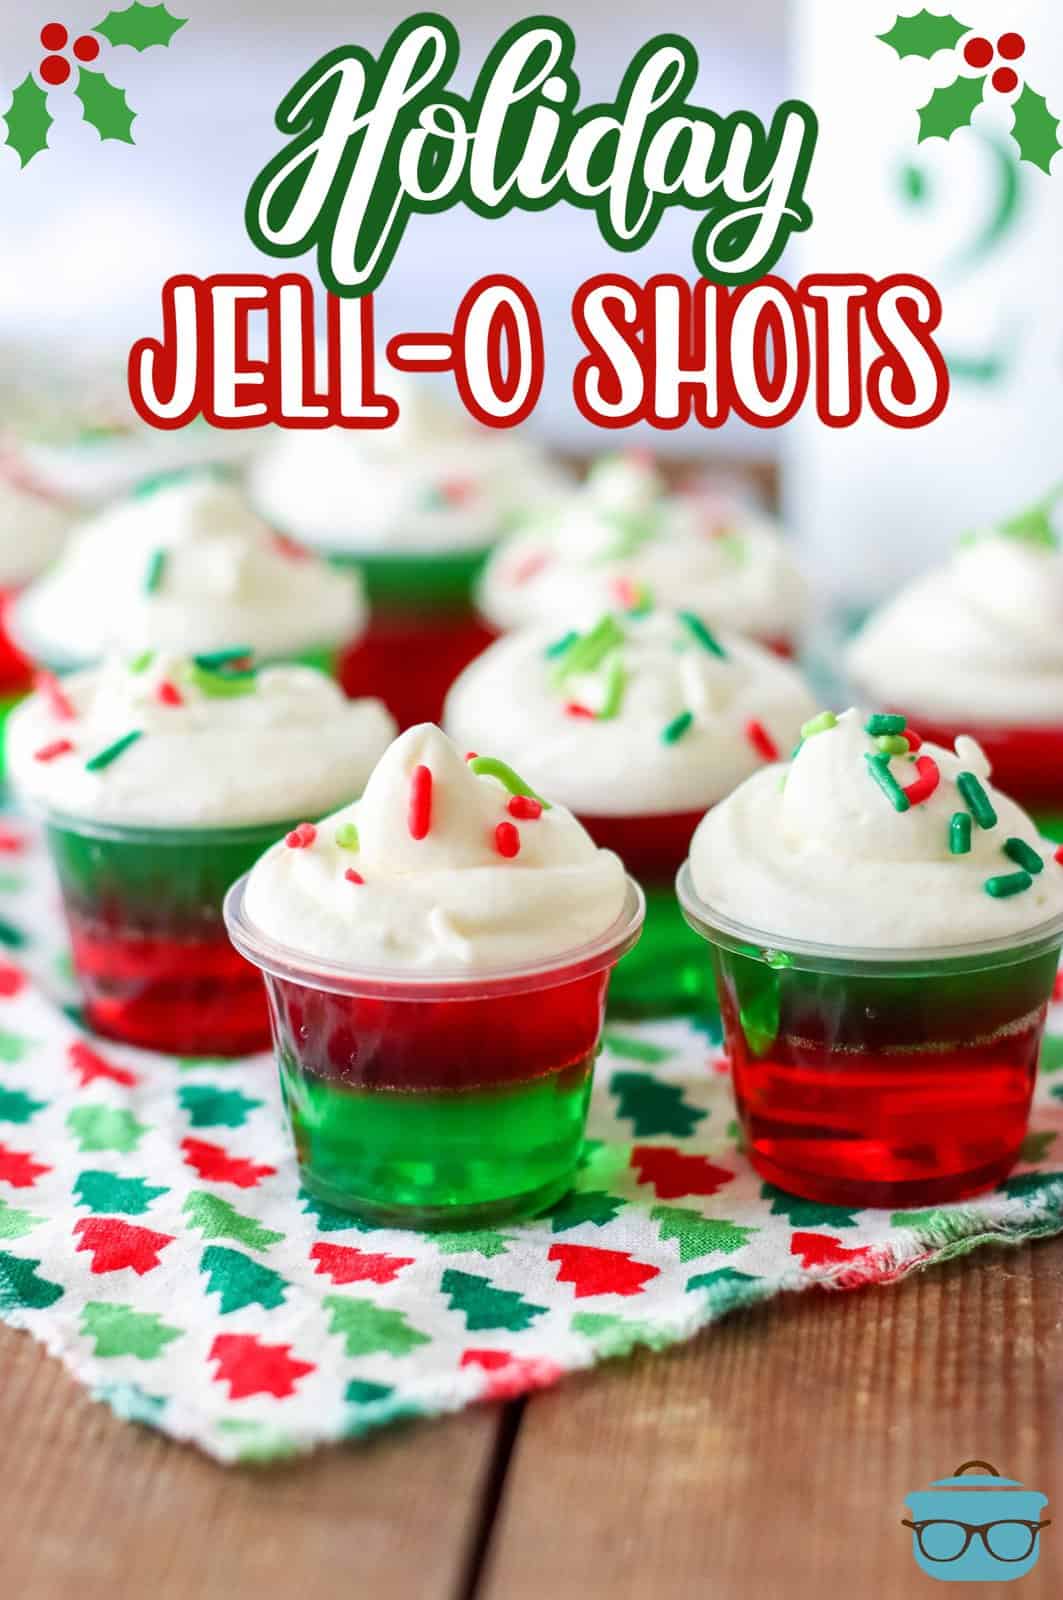 Pinterest image of Holiday Jell-O Shots on holiday linen garnished.